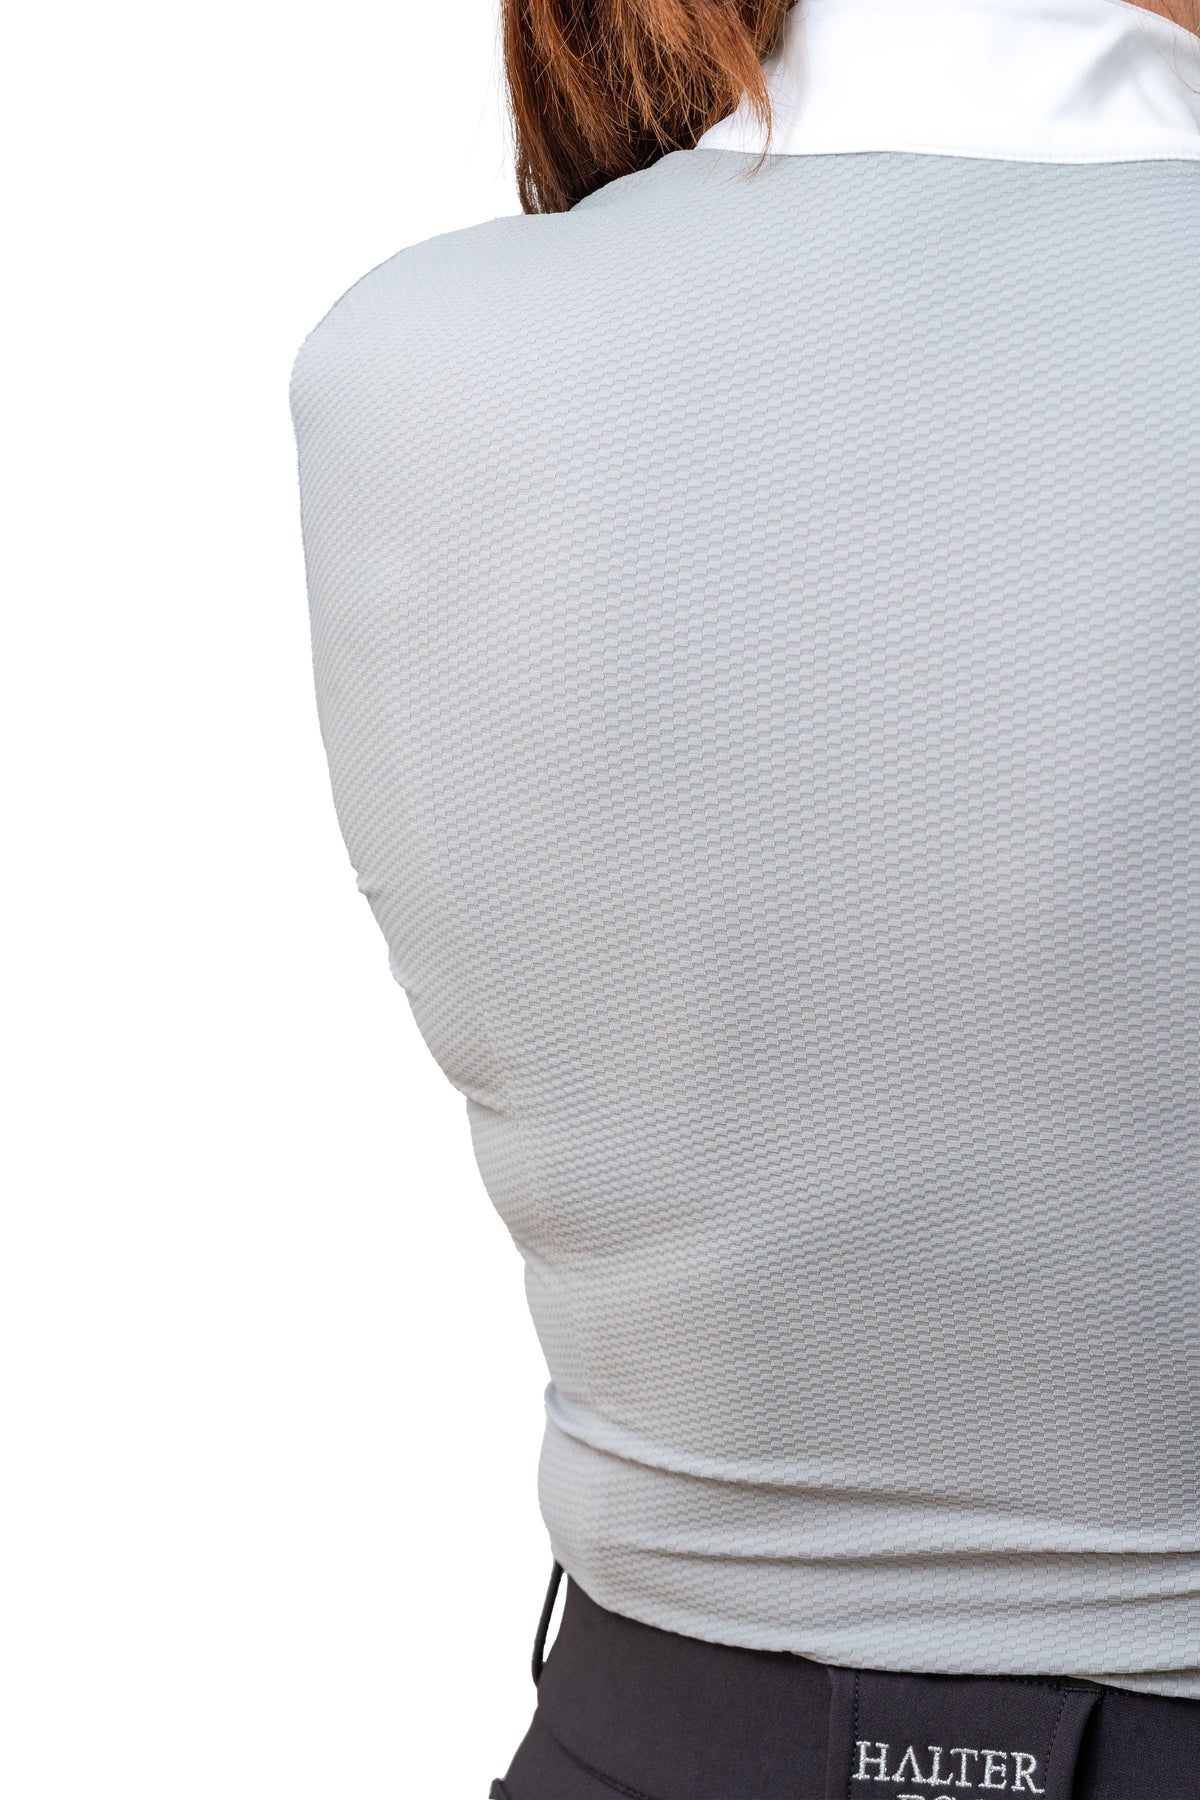 Devon - Long Sleeved Show Shirt